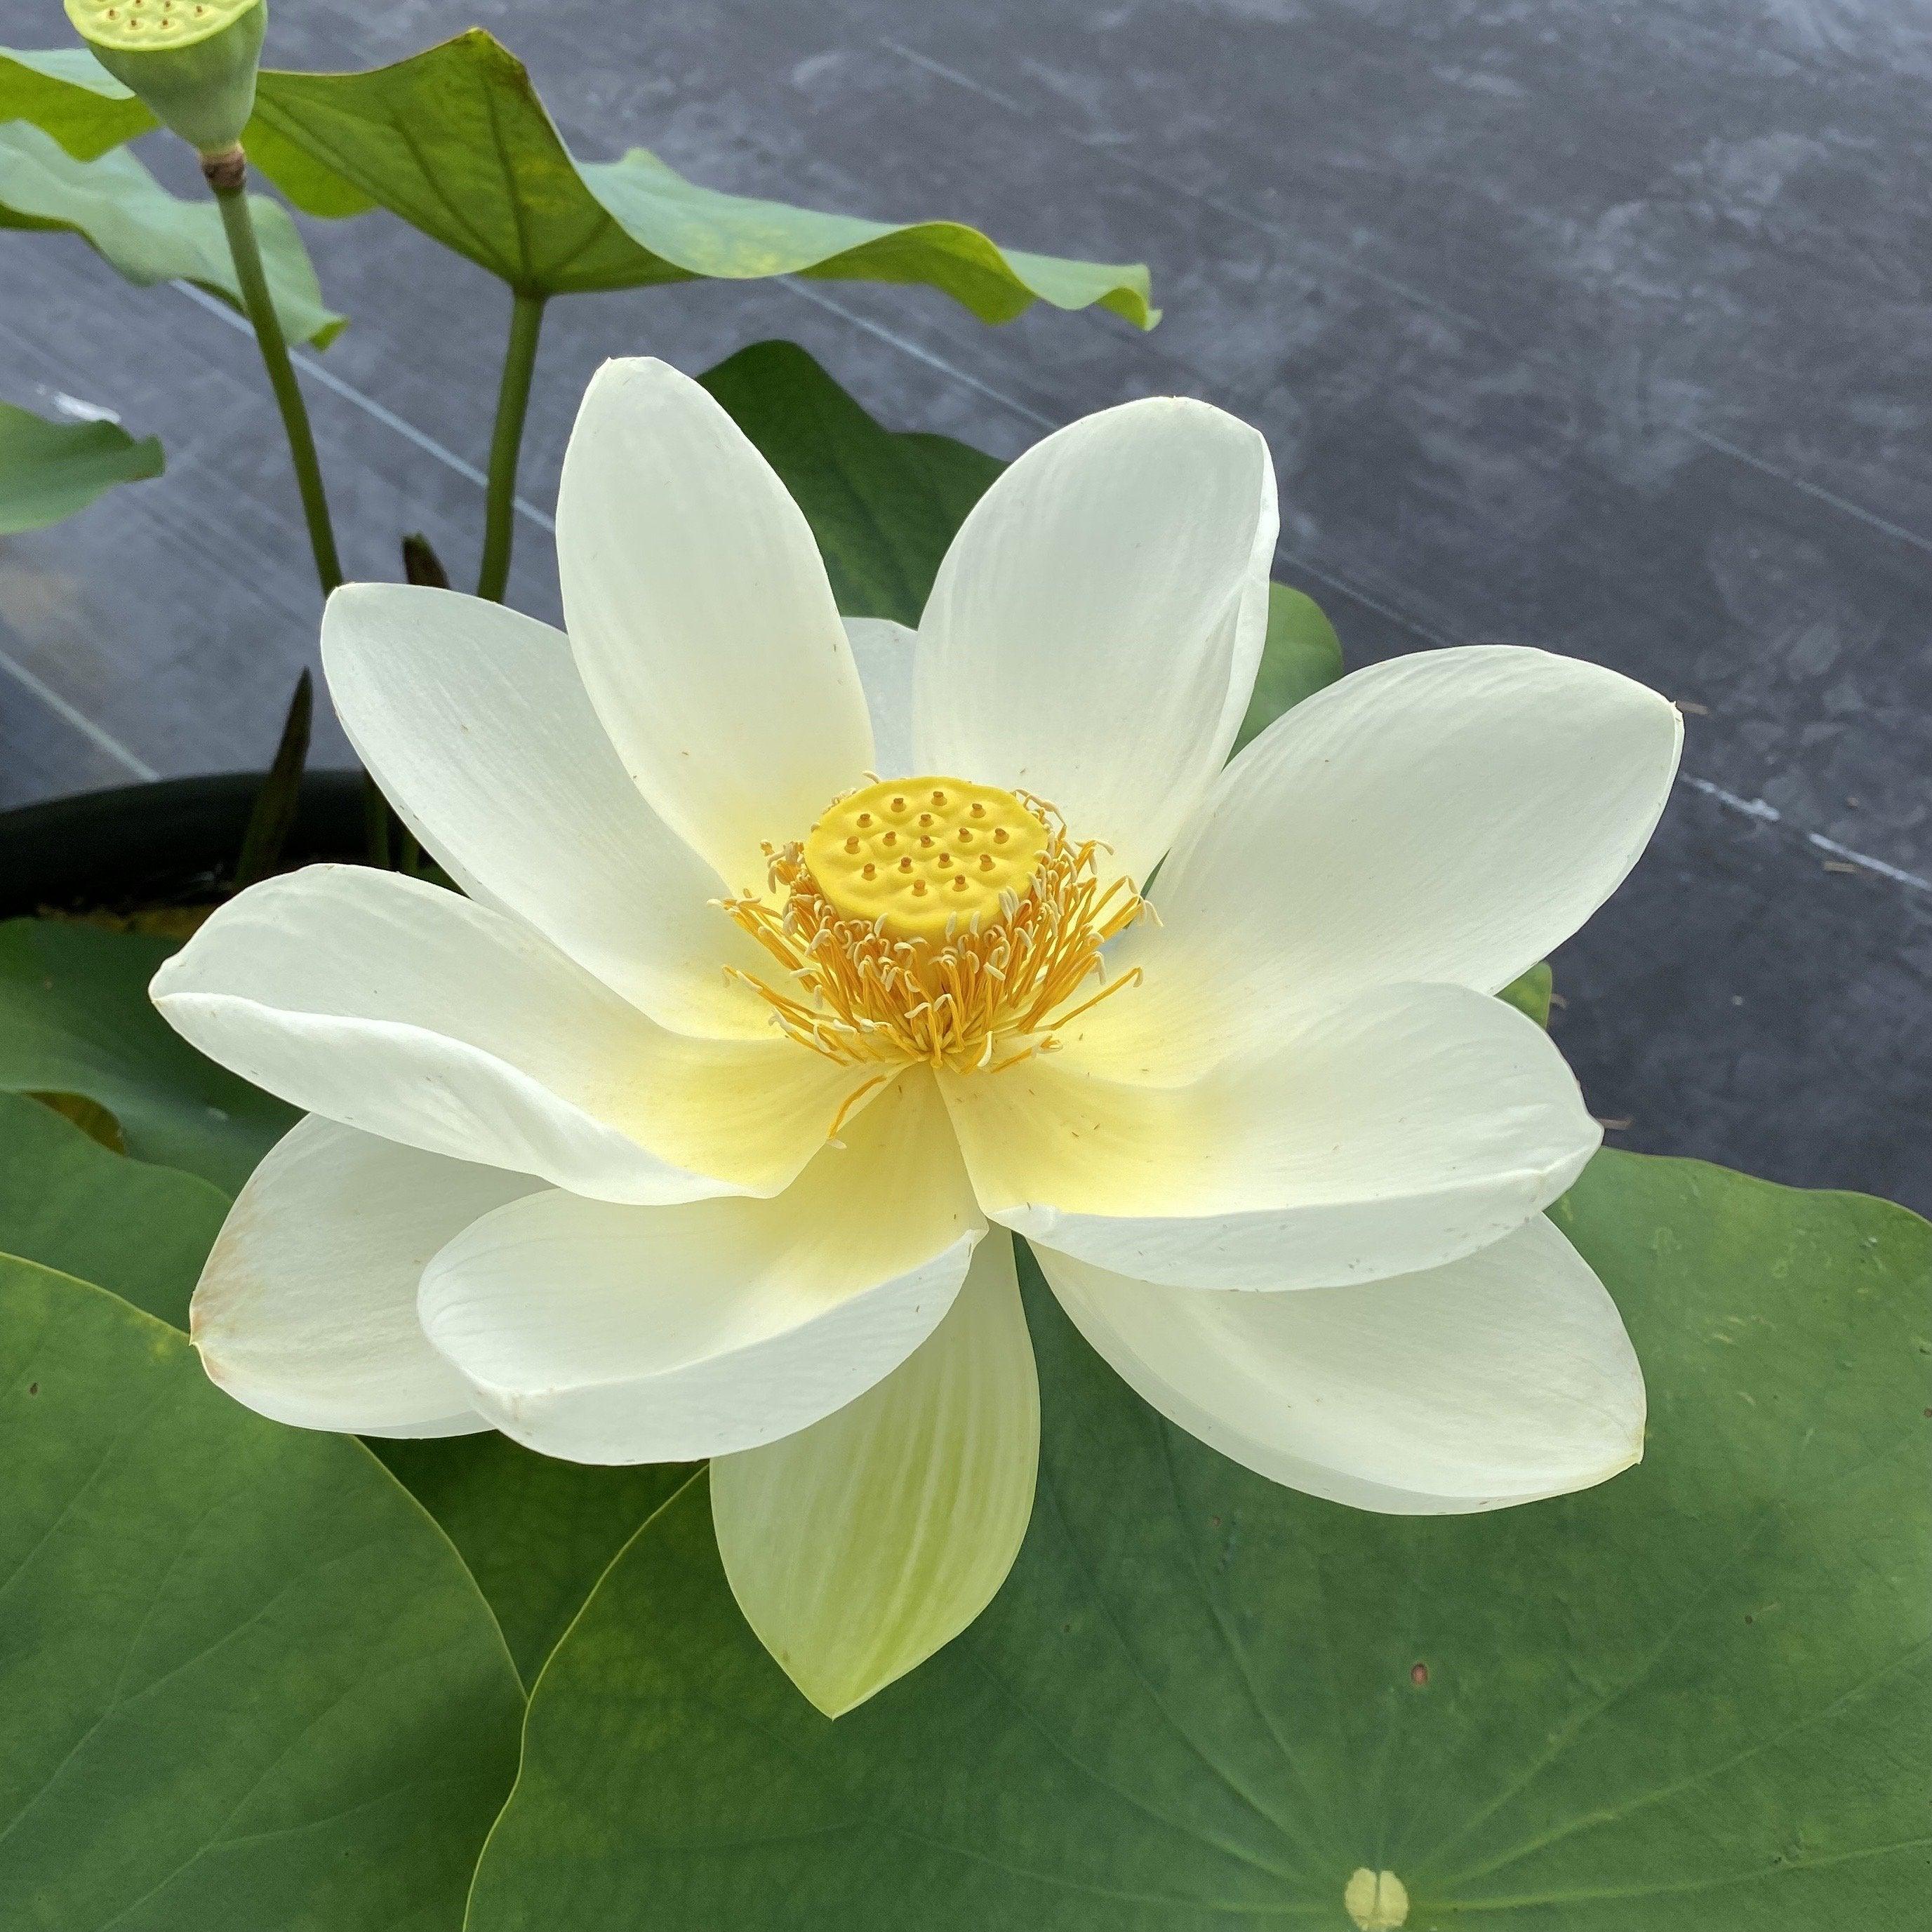 Yellow Bird -Majestic Beauty Lotus (Bare Root) - Play It Koi